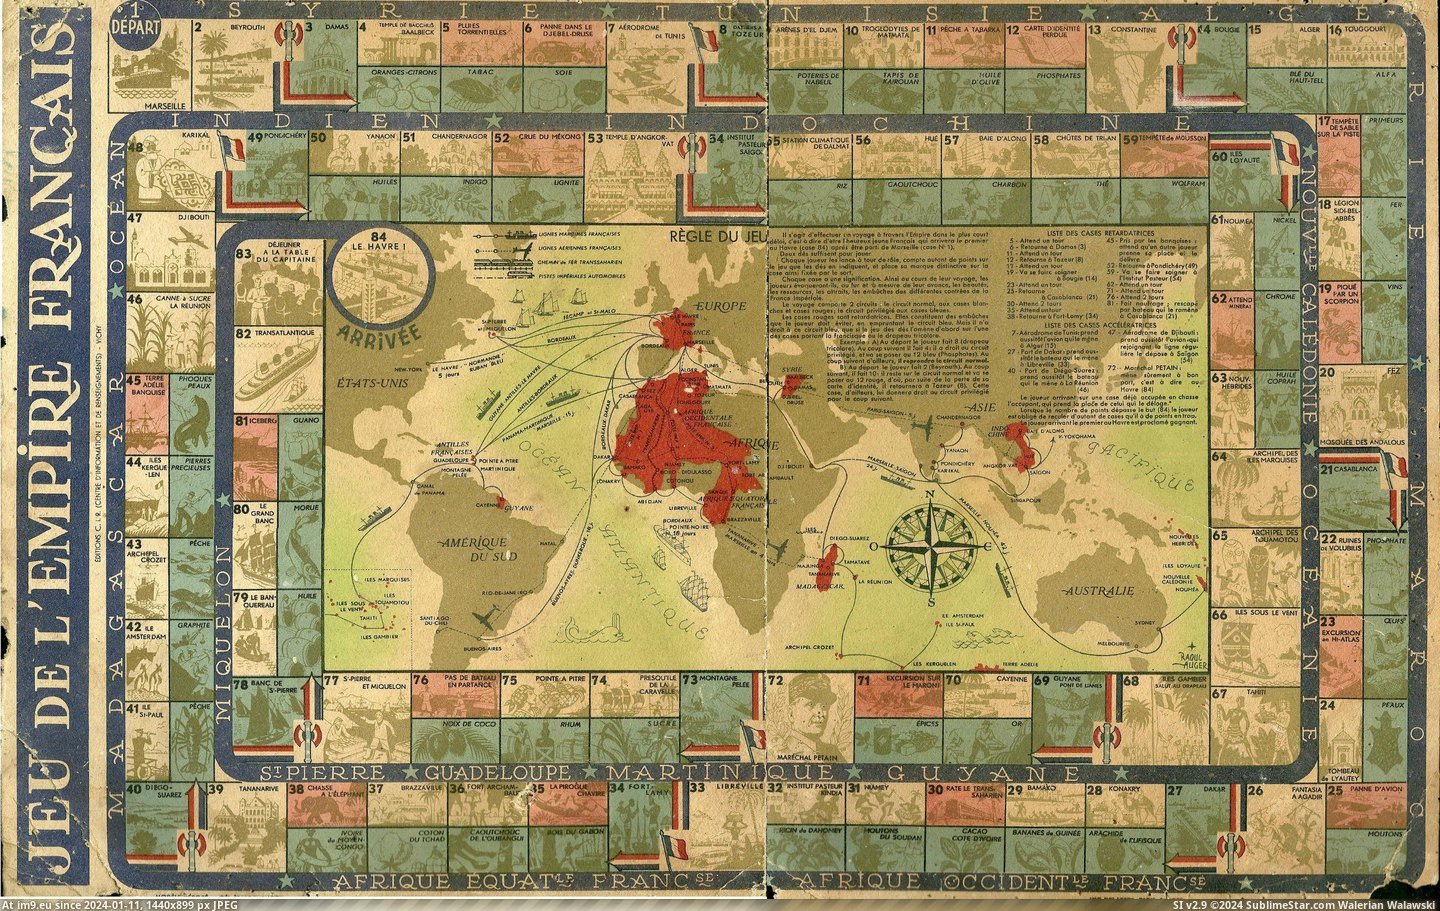 #Game #French #Jeu #Empire #Fran [Mapporn] Jeu de L’empire Français (Game of the French Empire) ca. 1940. [2949x1853] Pic. (Image of album My r/MAPS favs))